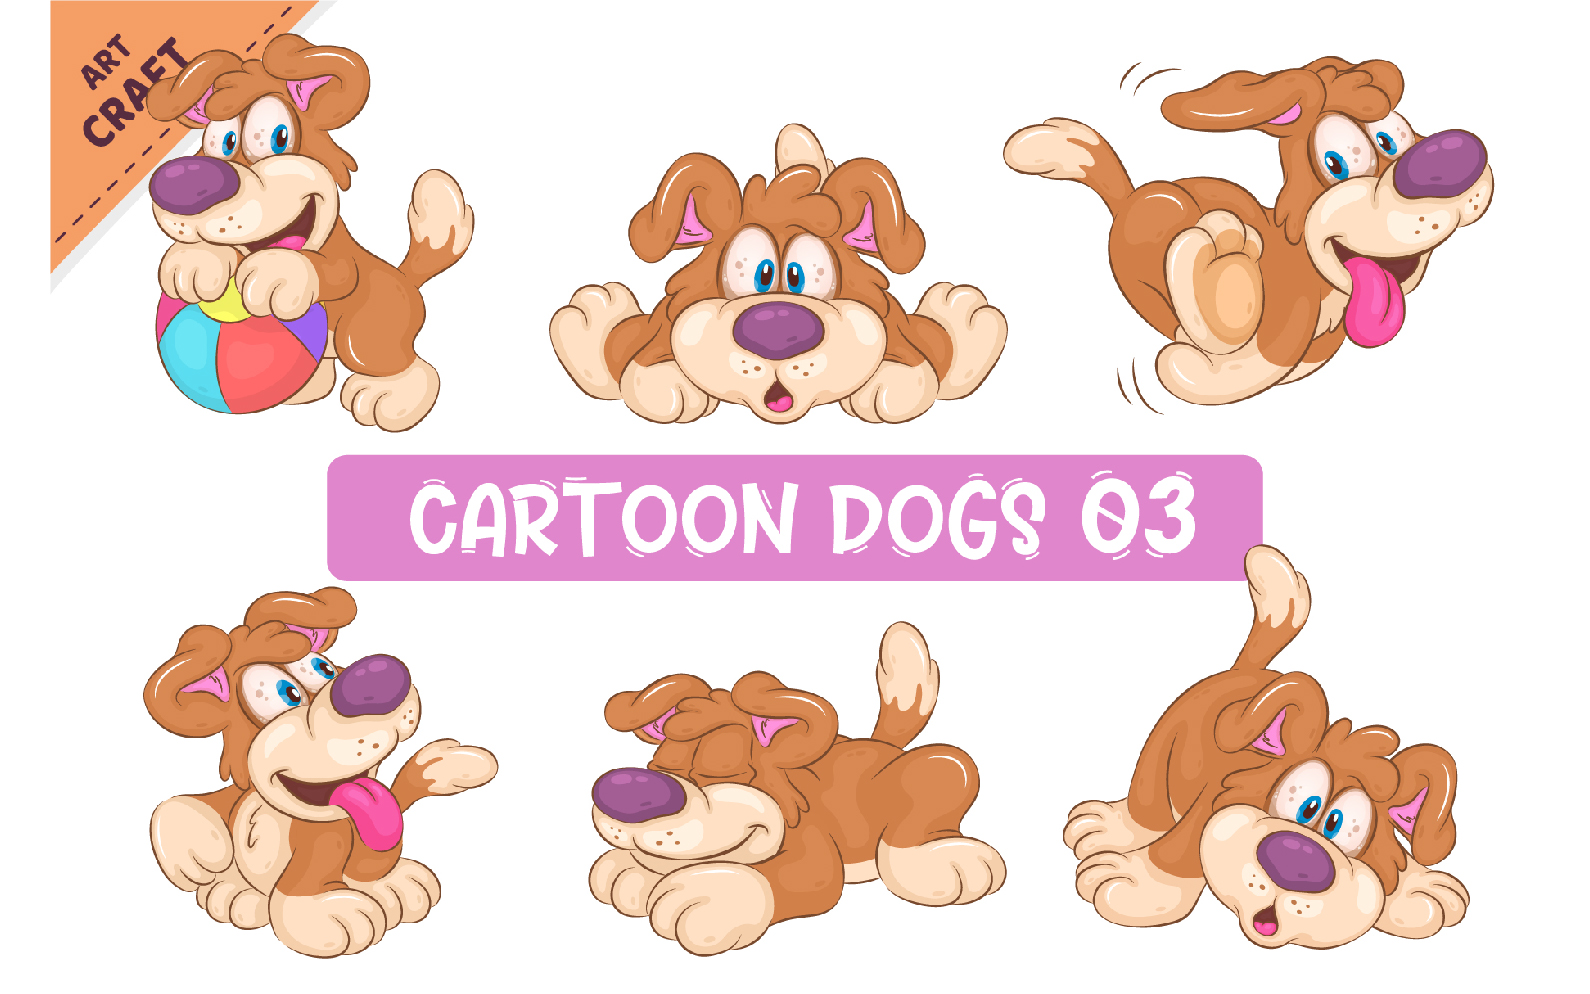 Set of Cartoon Dogs 03. Clipart.